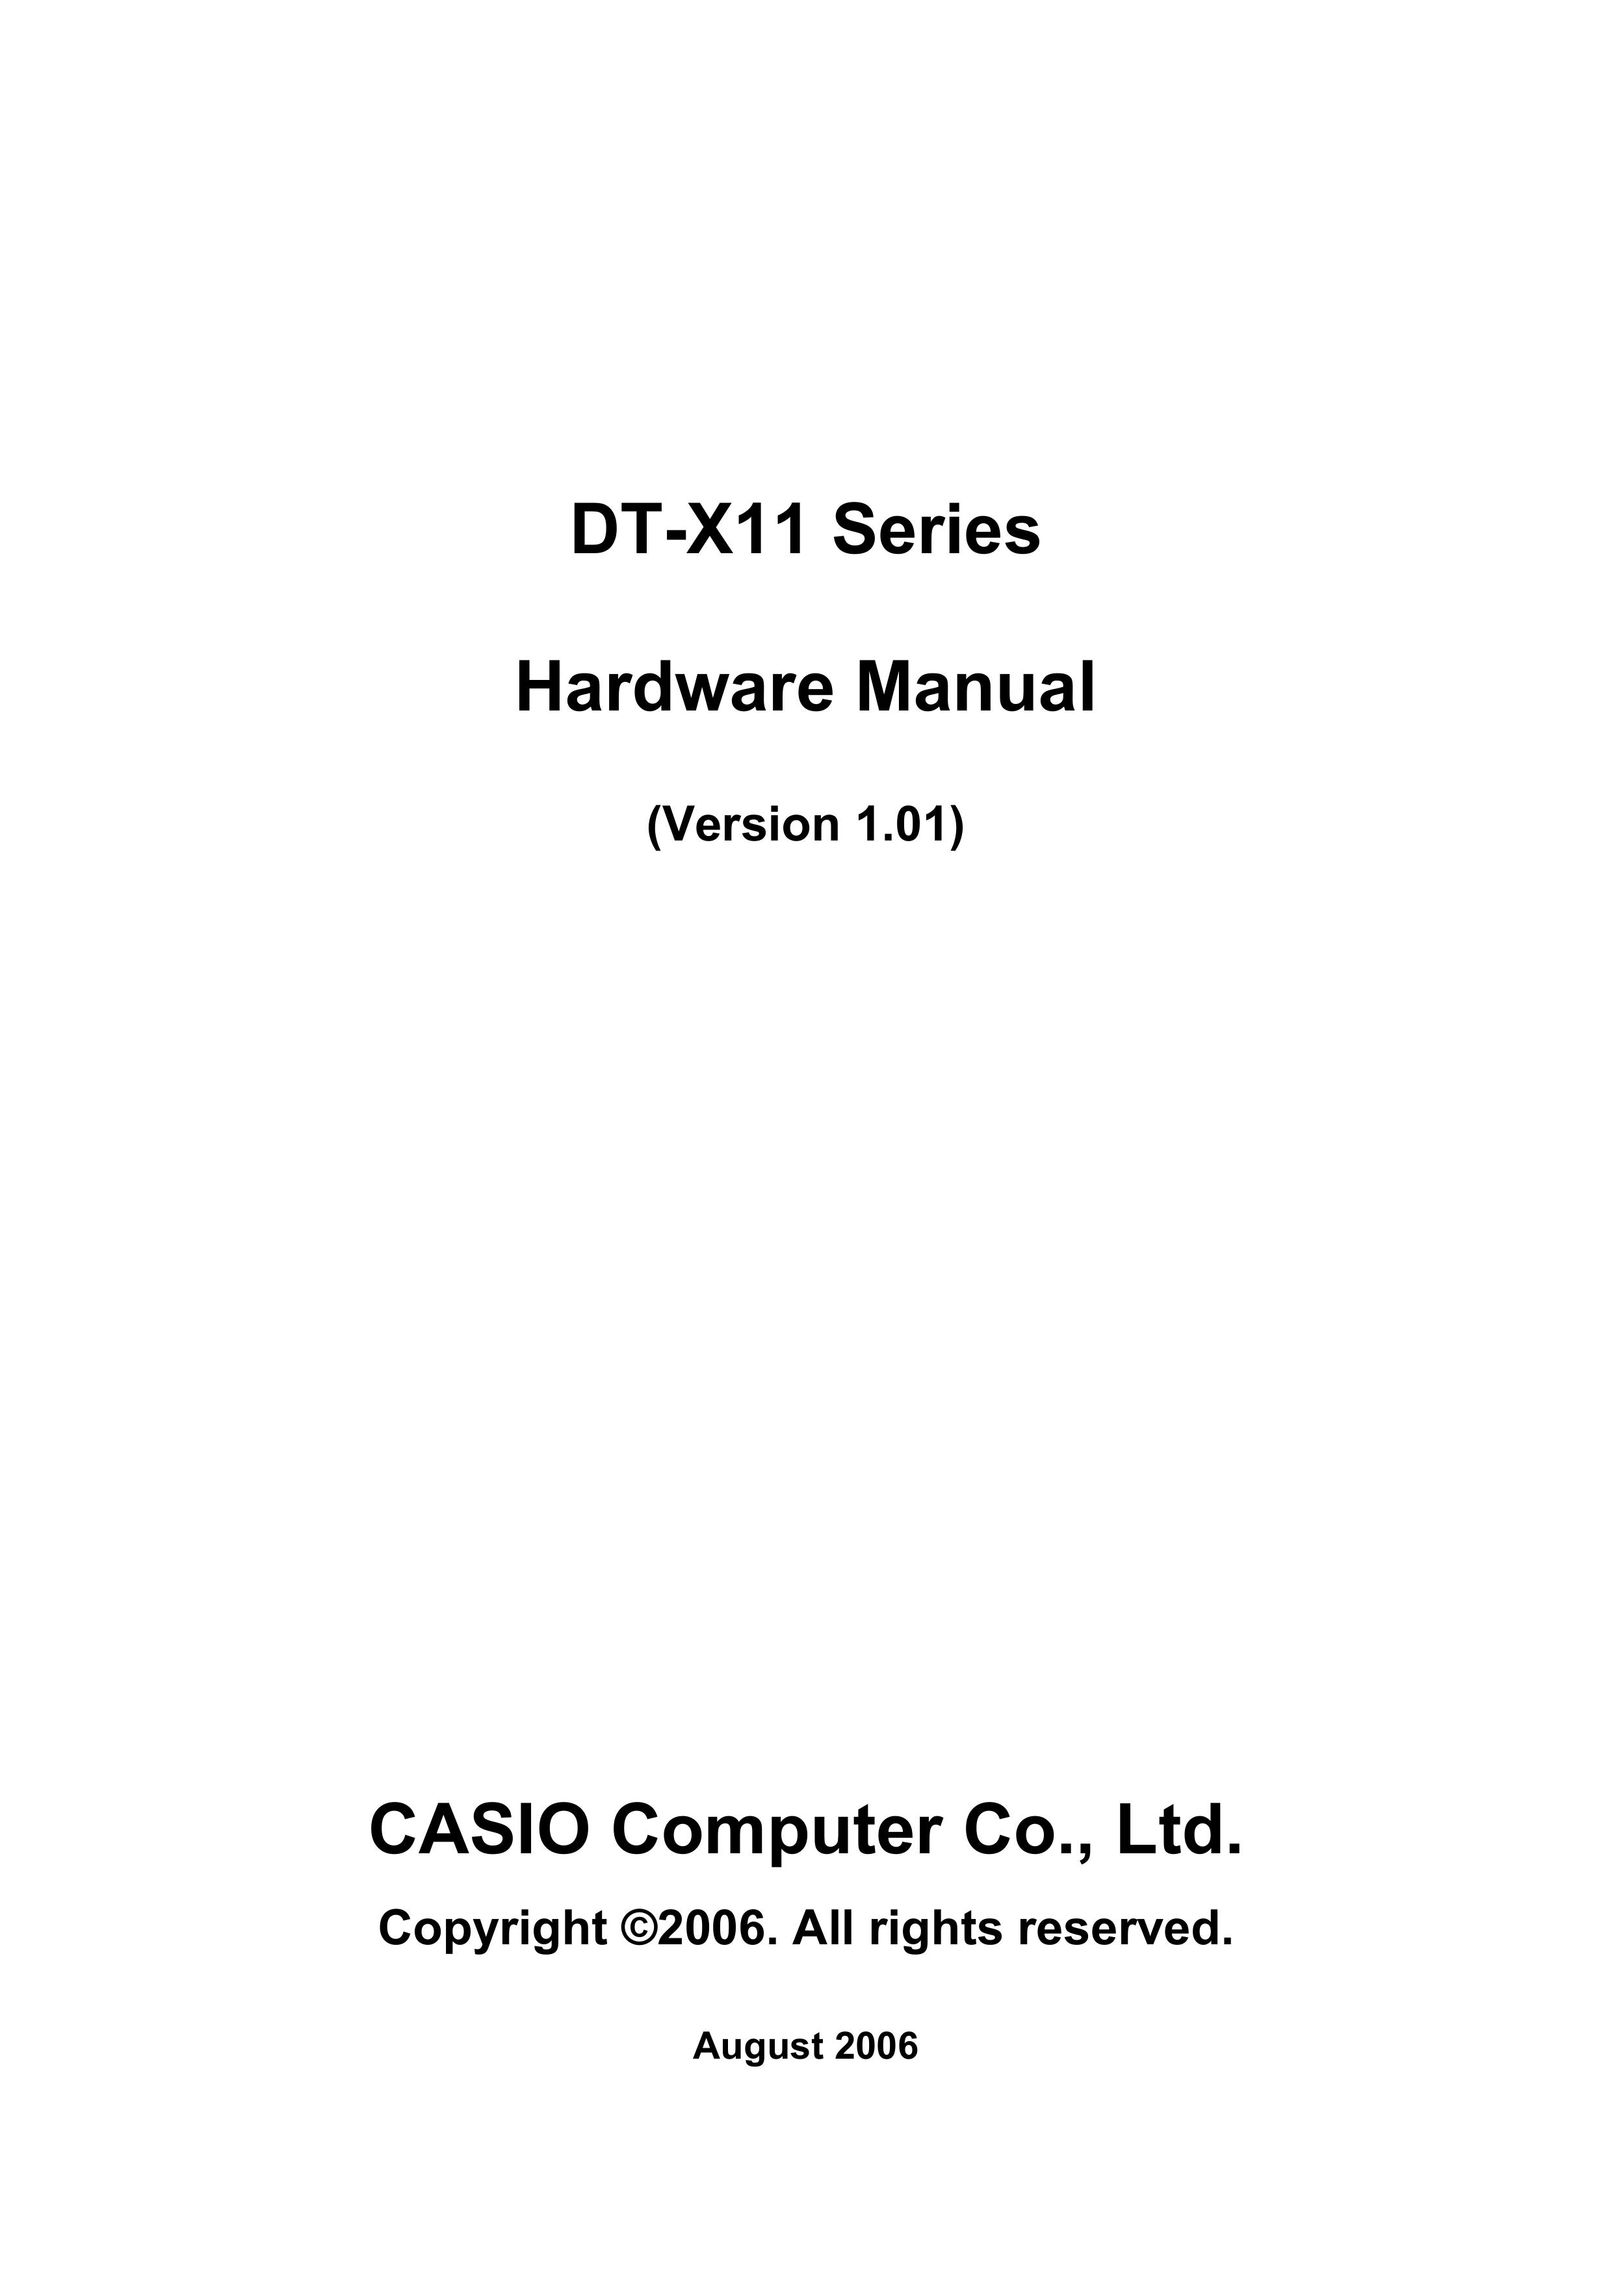 Casio DT-X11 Series Computer Hardware User Manual